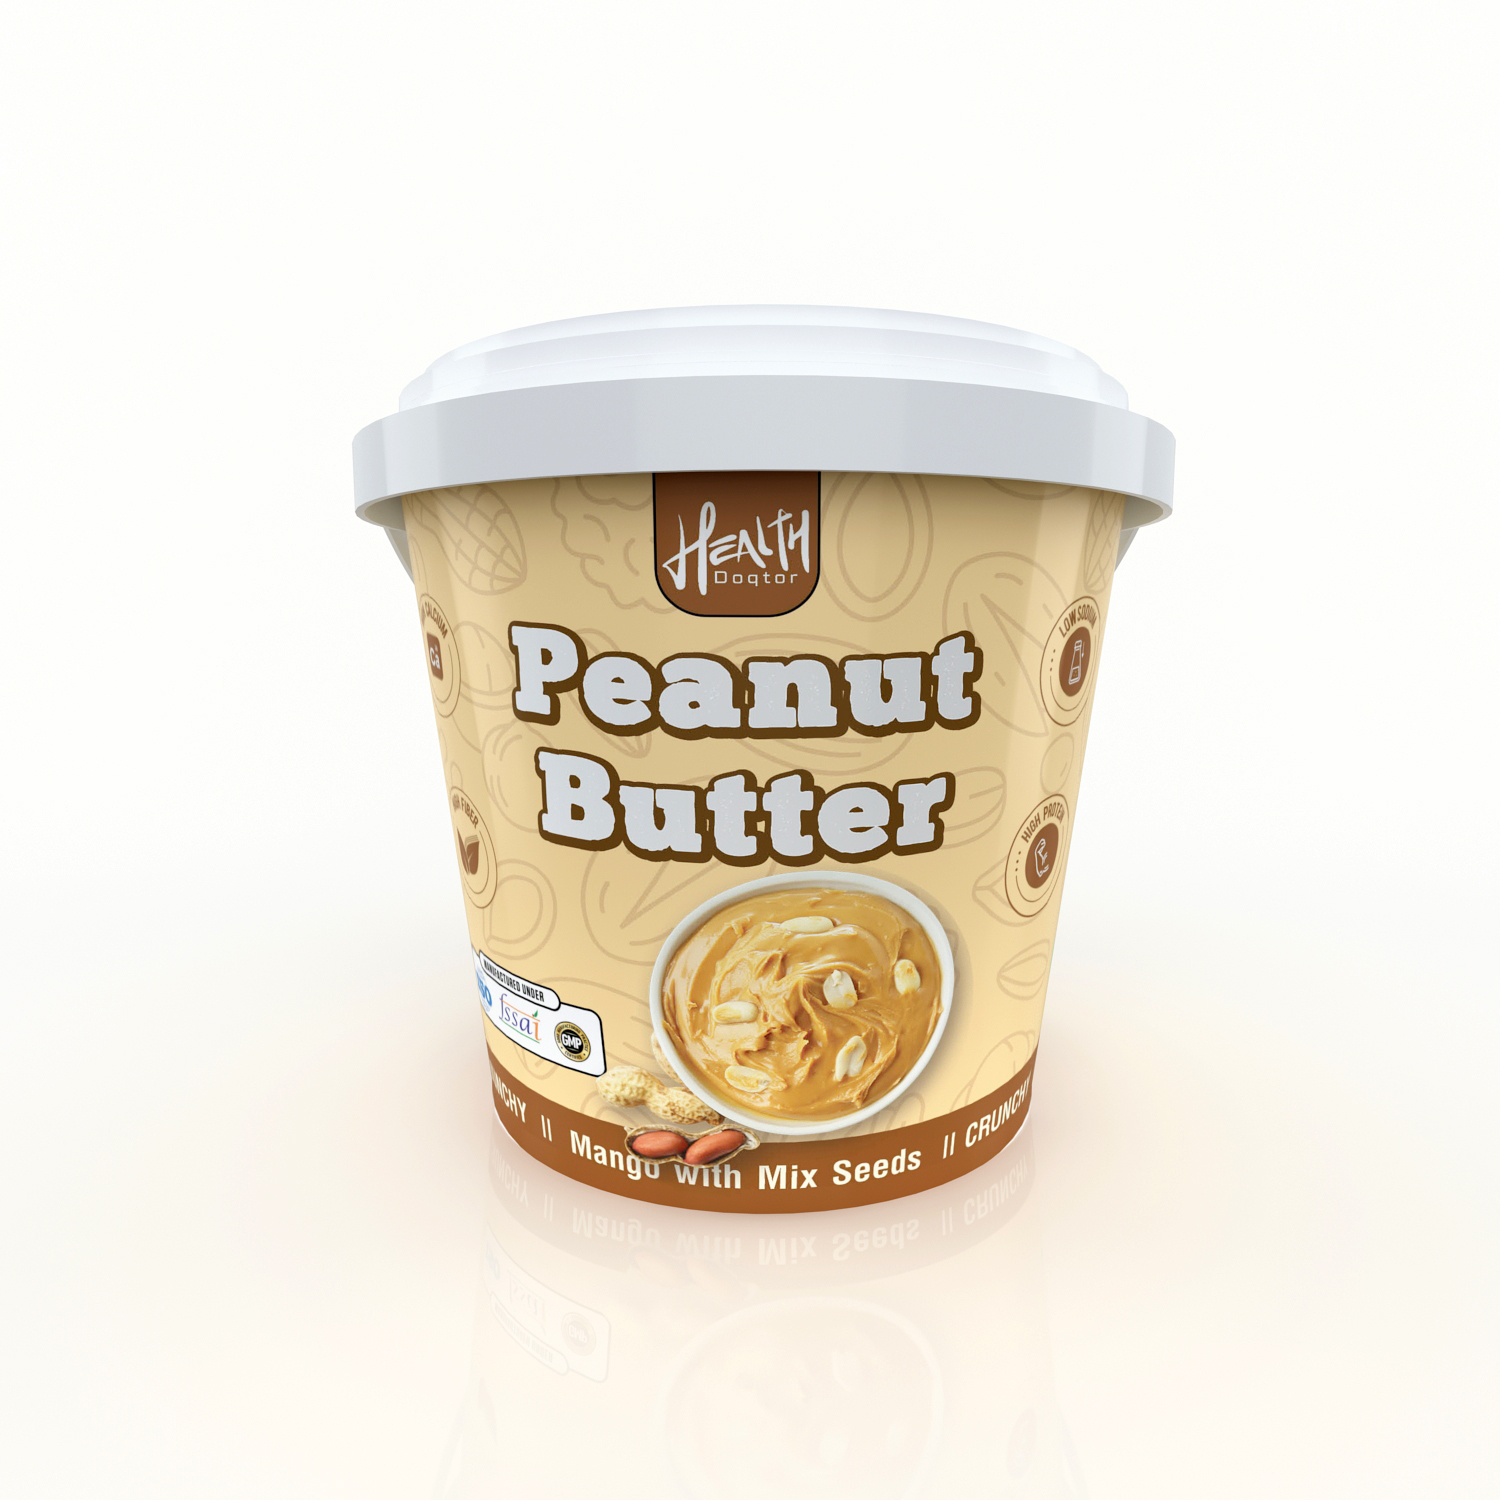 HealthDoqtor's Peanut Butter